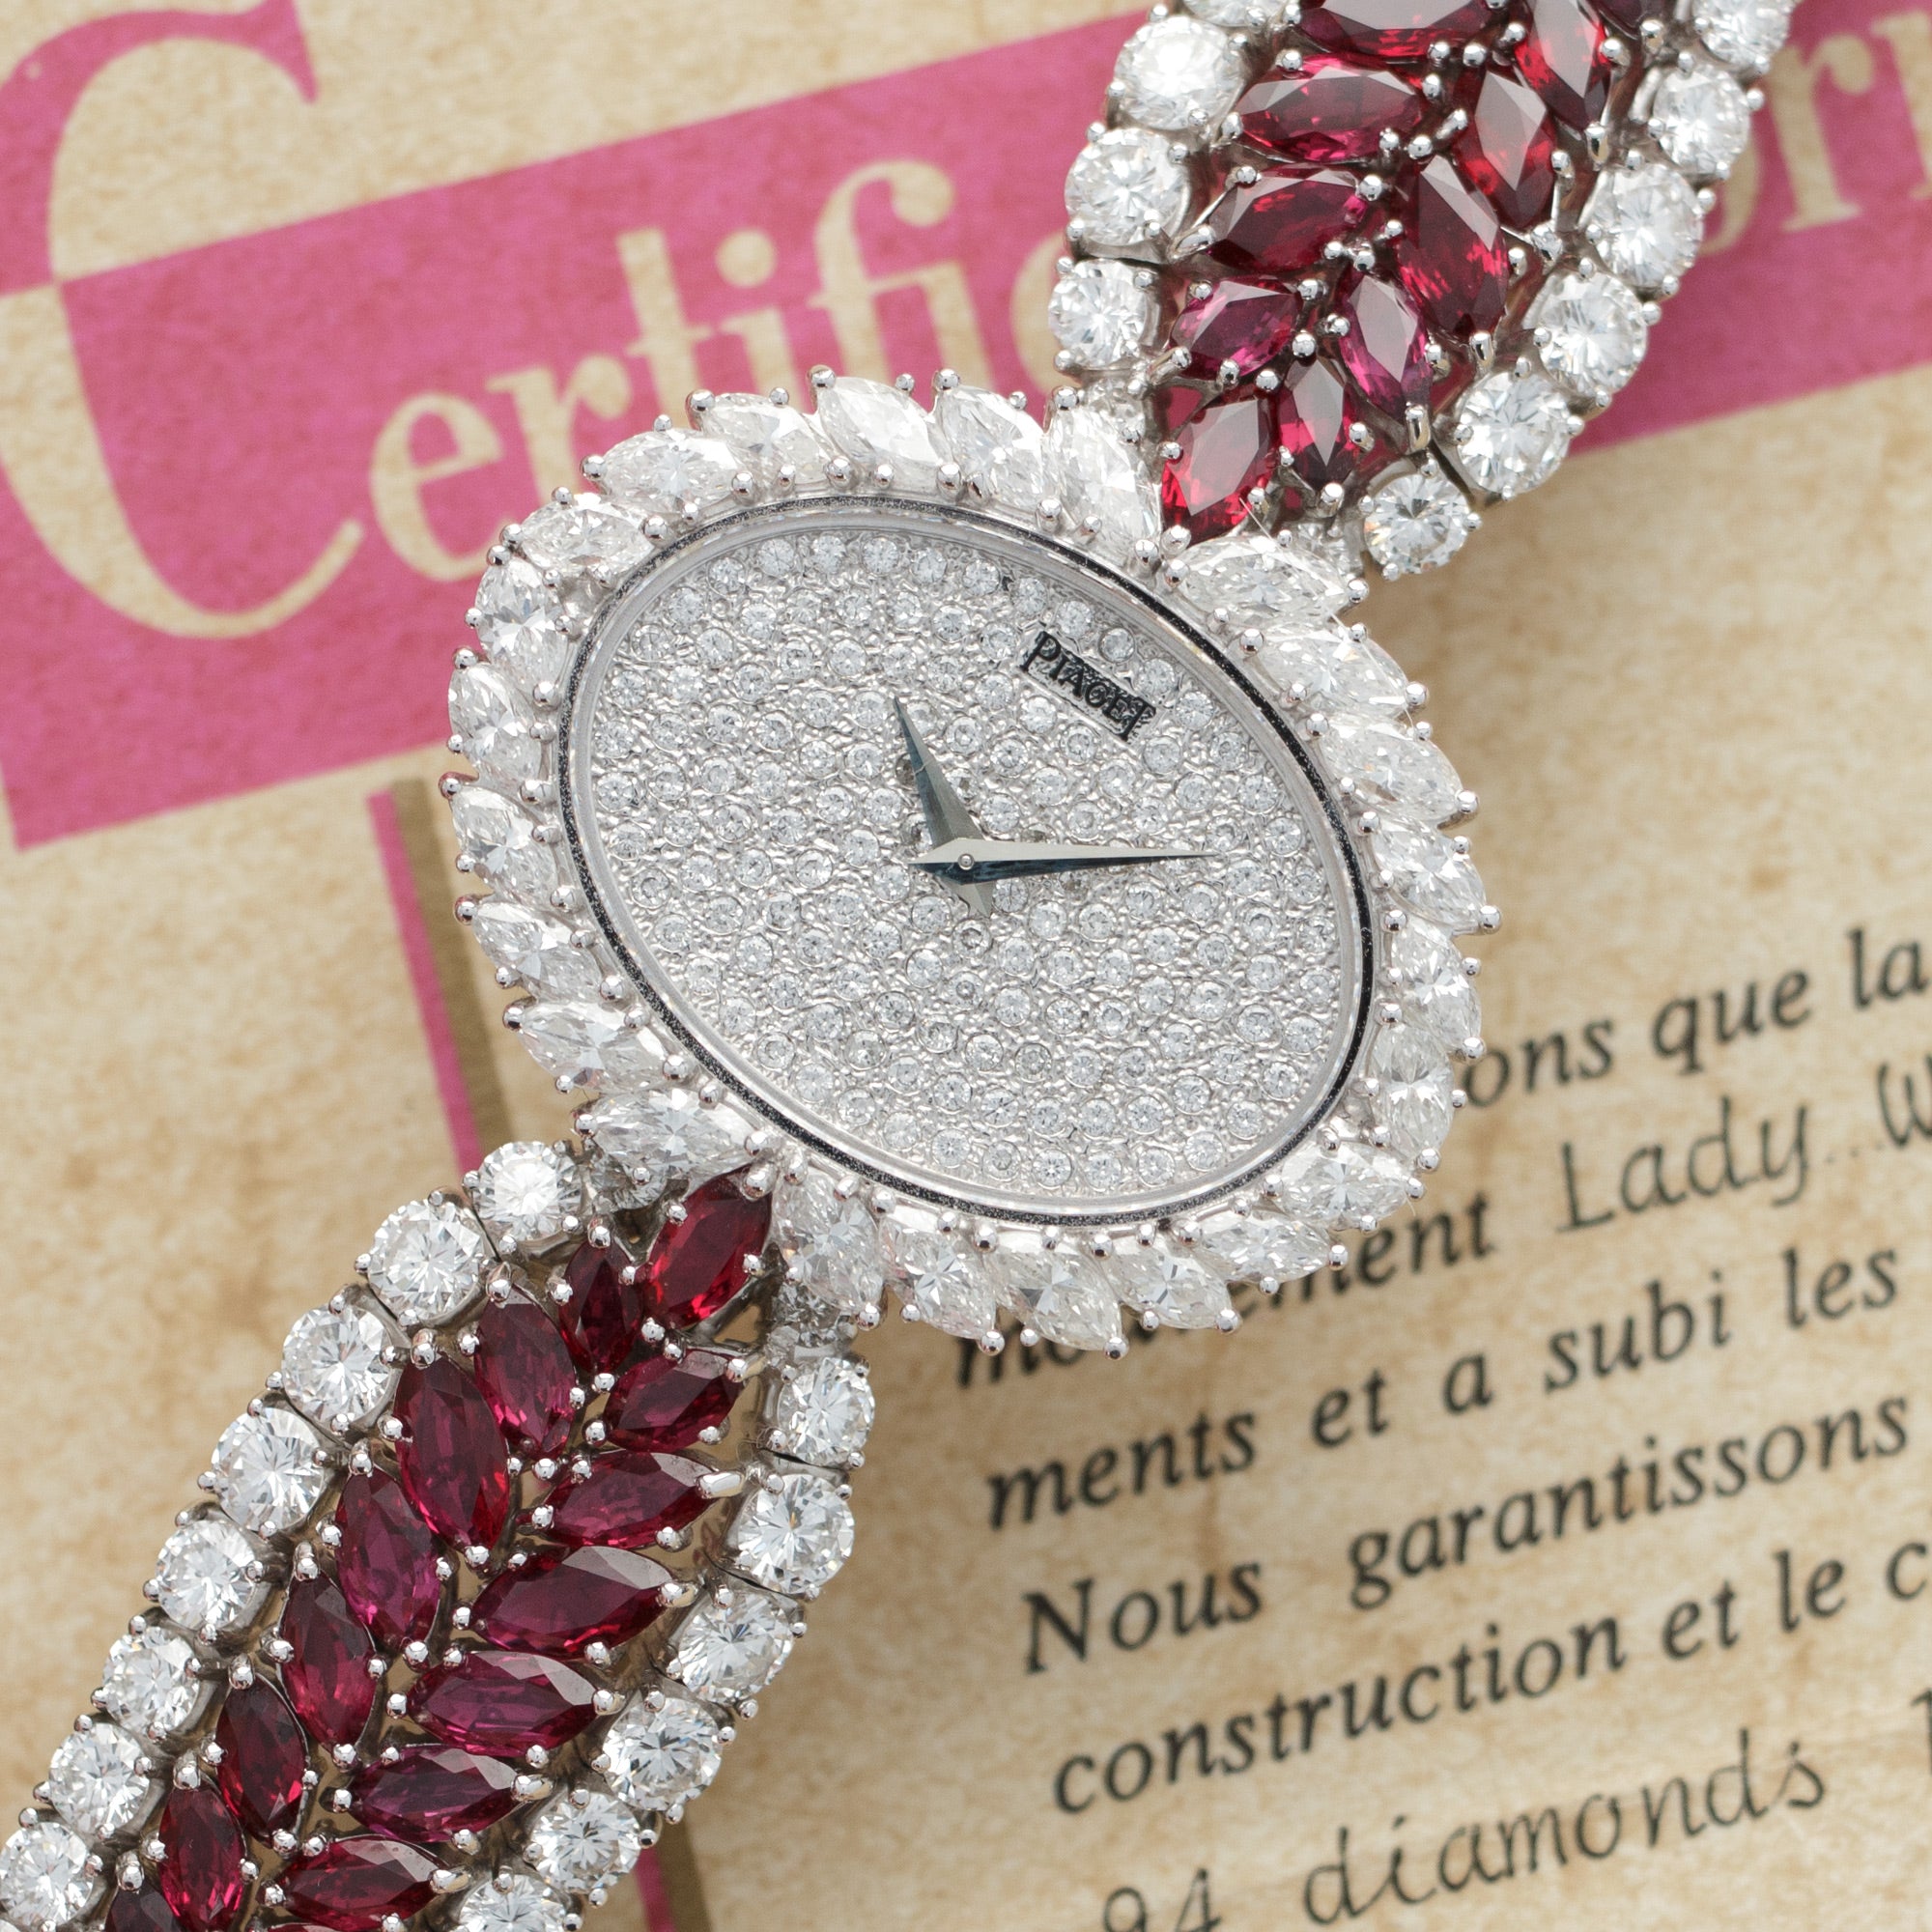 Piaget - Piaget White Gold Diamond & Ruby Bracelet Watch - The Keystone Watches